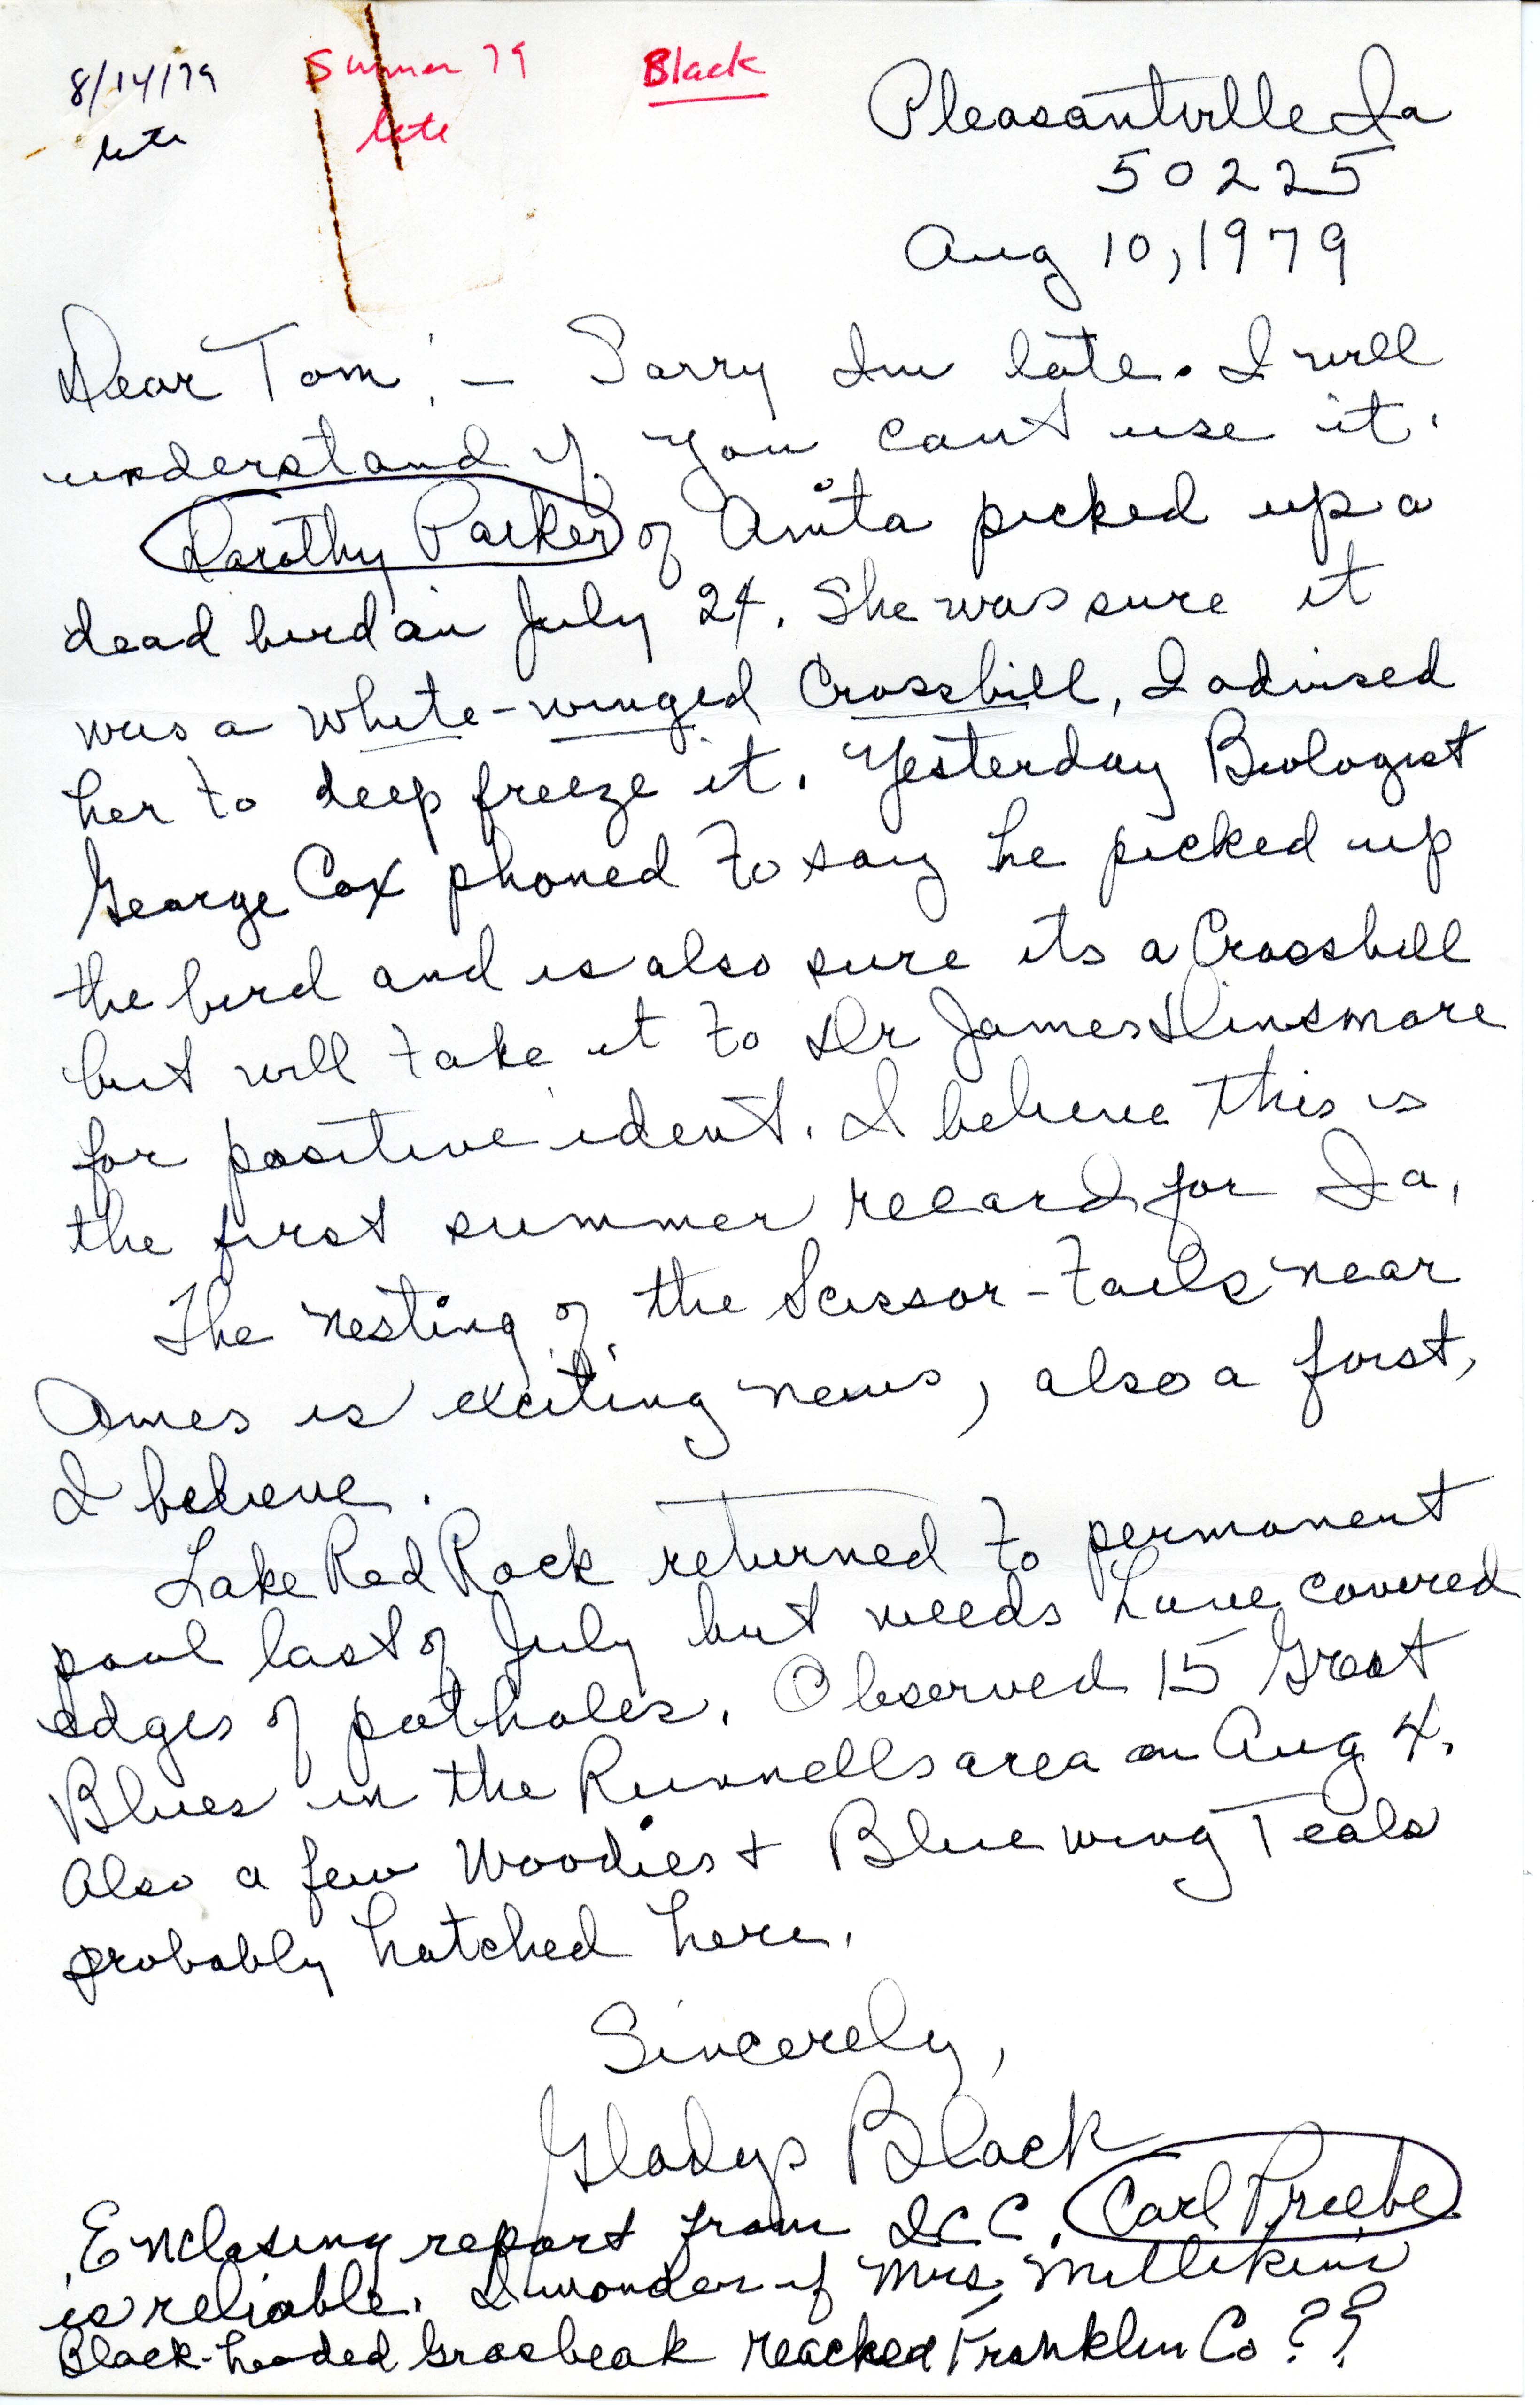 Gladys Black letter to Thomas H. Kent regarding bird sightings, August 10, 1979